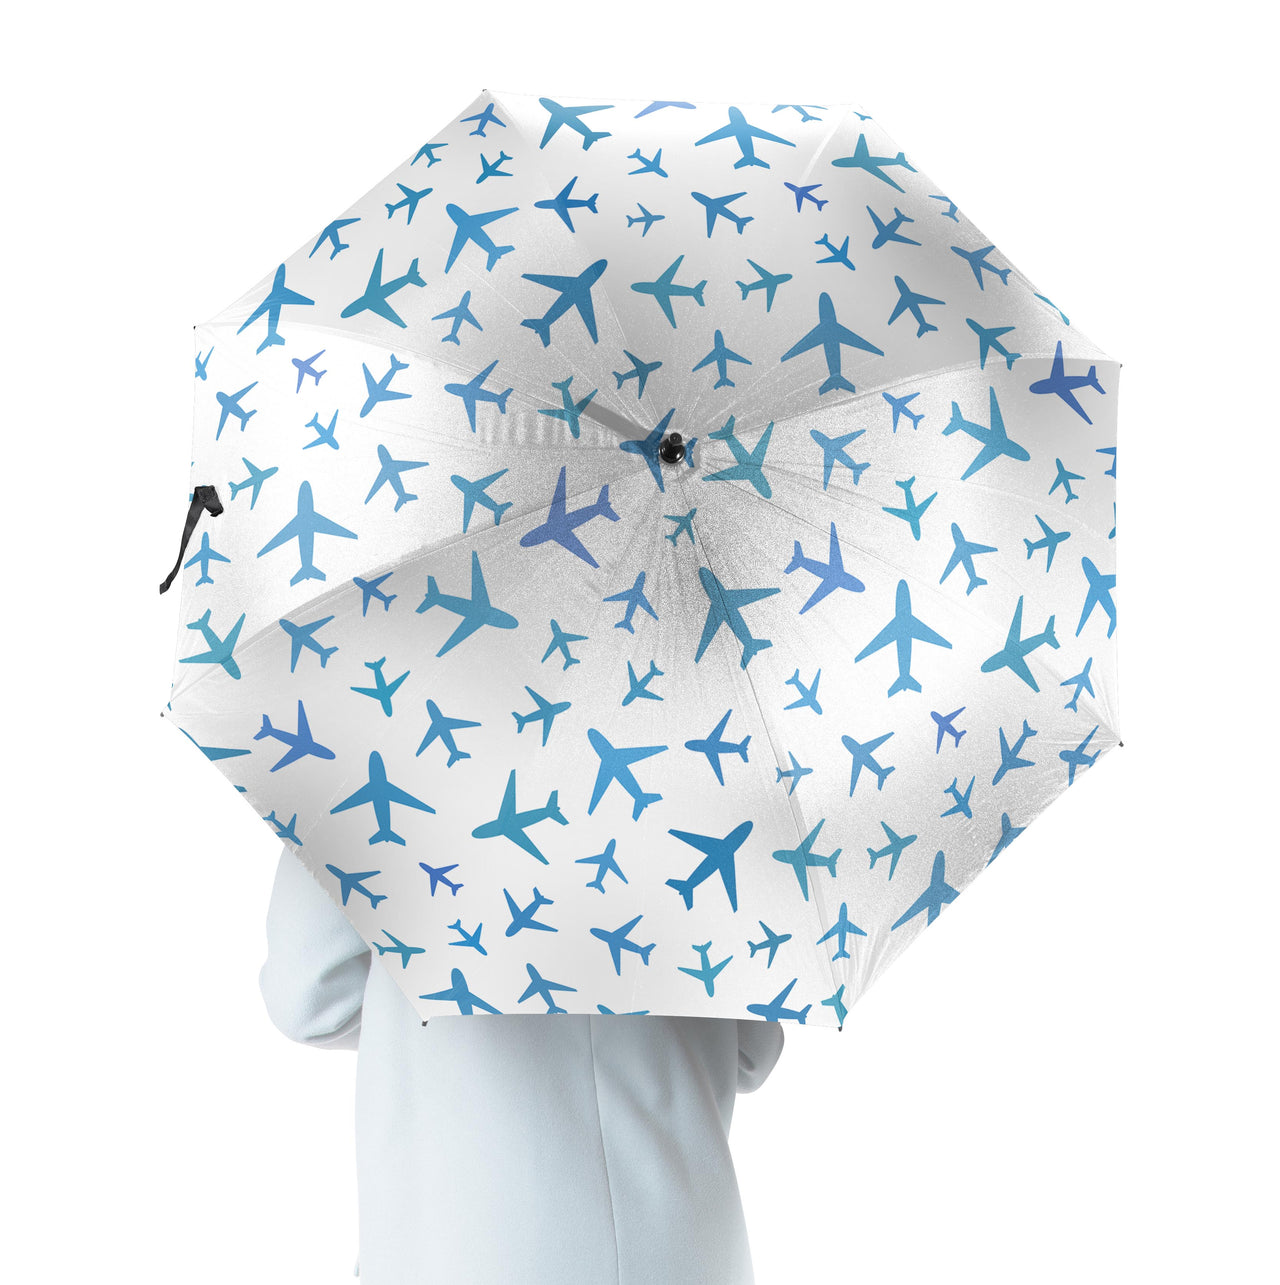 Many Airplanes Designed Umbrella